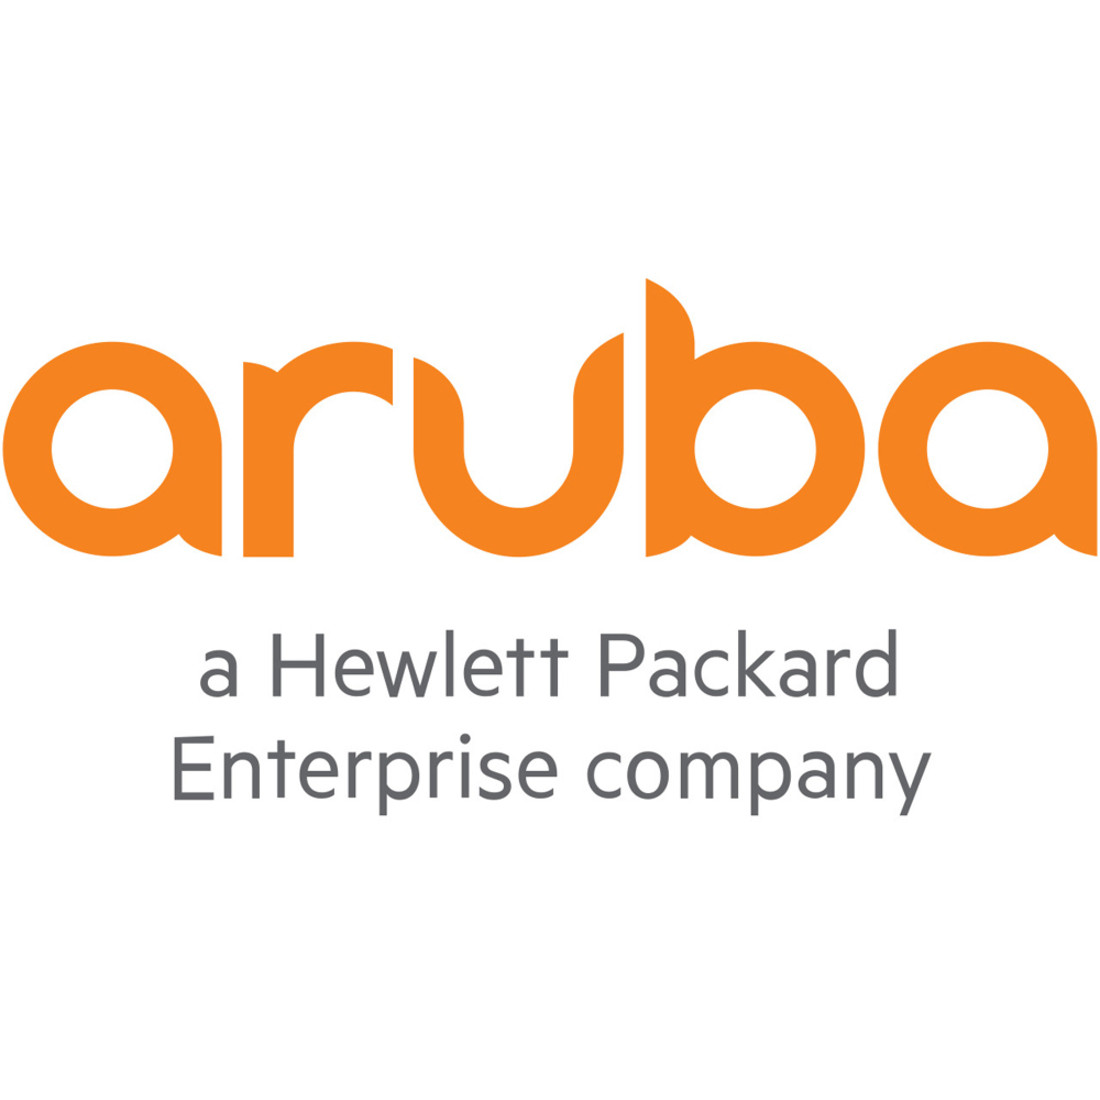 Aruba Foundation Care Extended WarrantyWarranty24 x 7 x 4 HourOn-siteMaintenanceParts & Labor HS0B5E